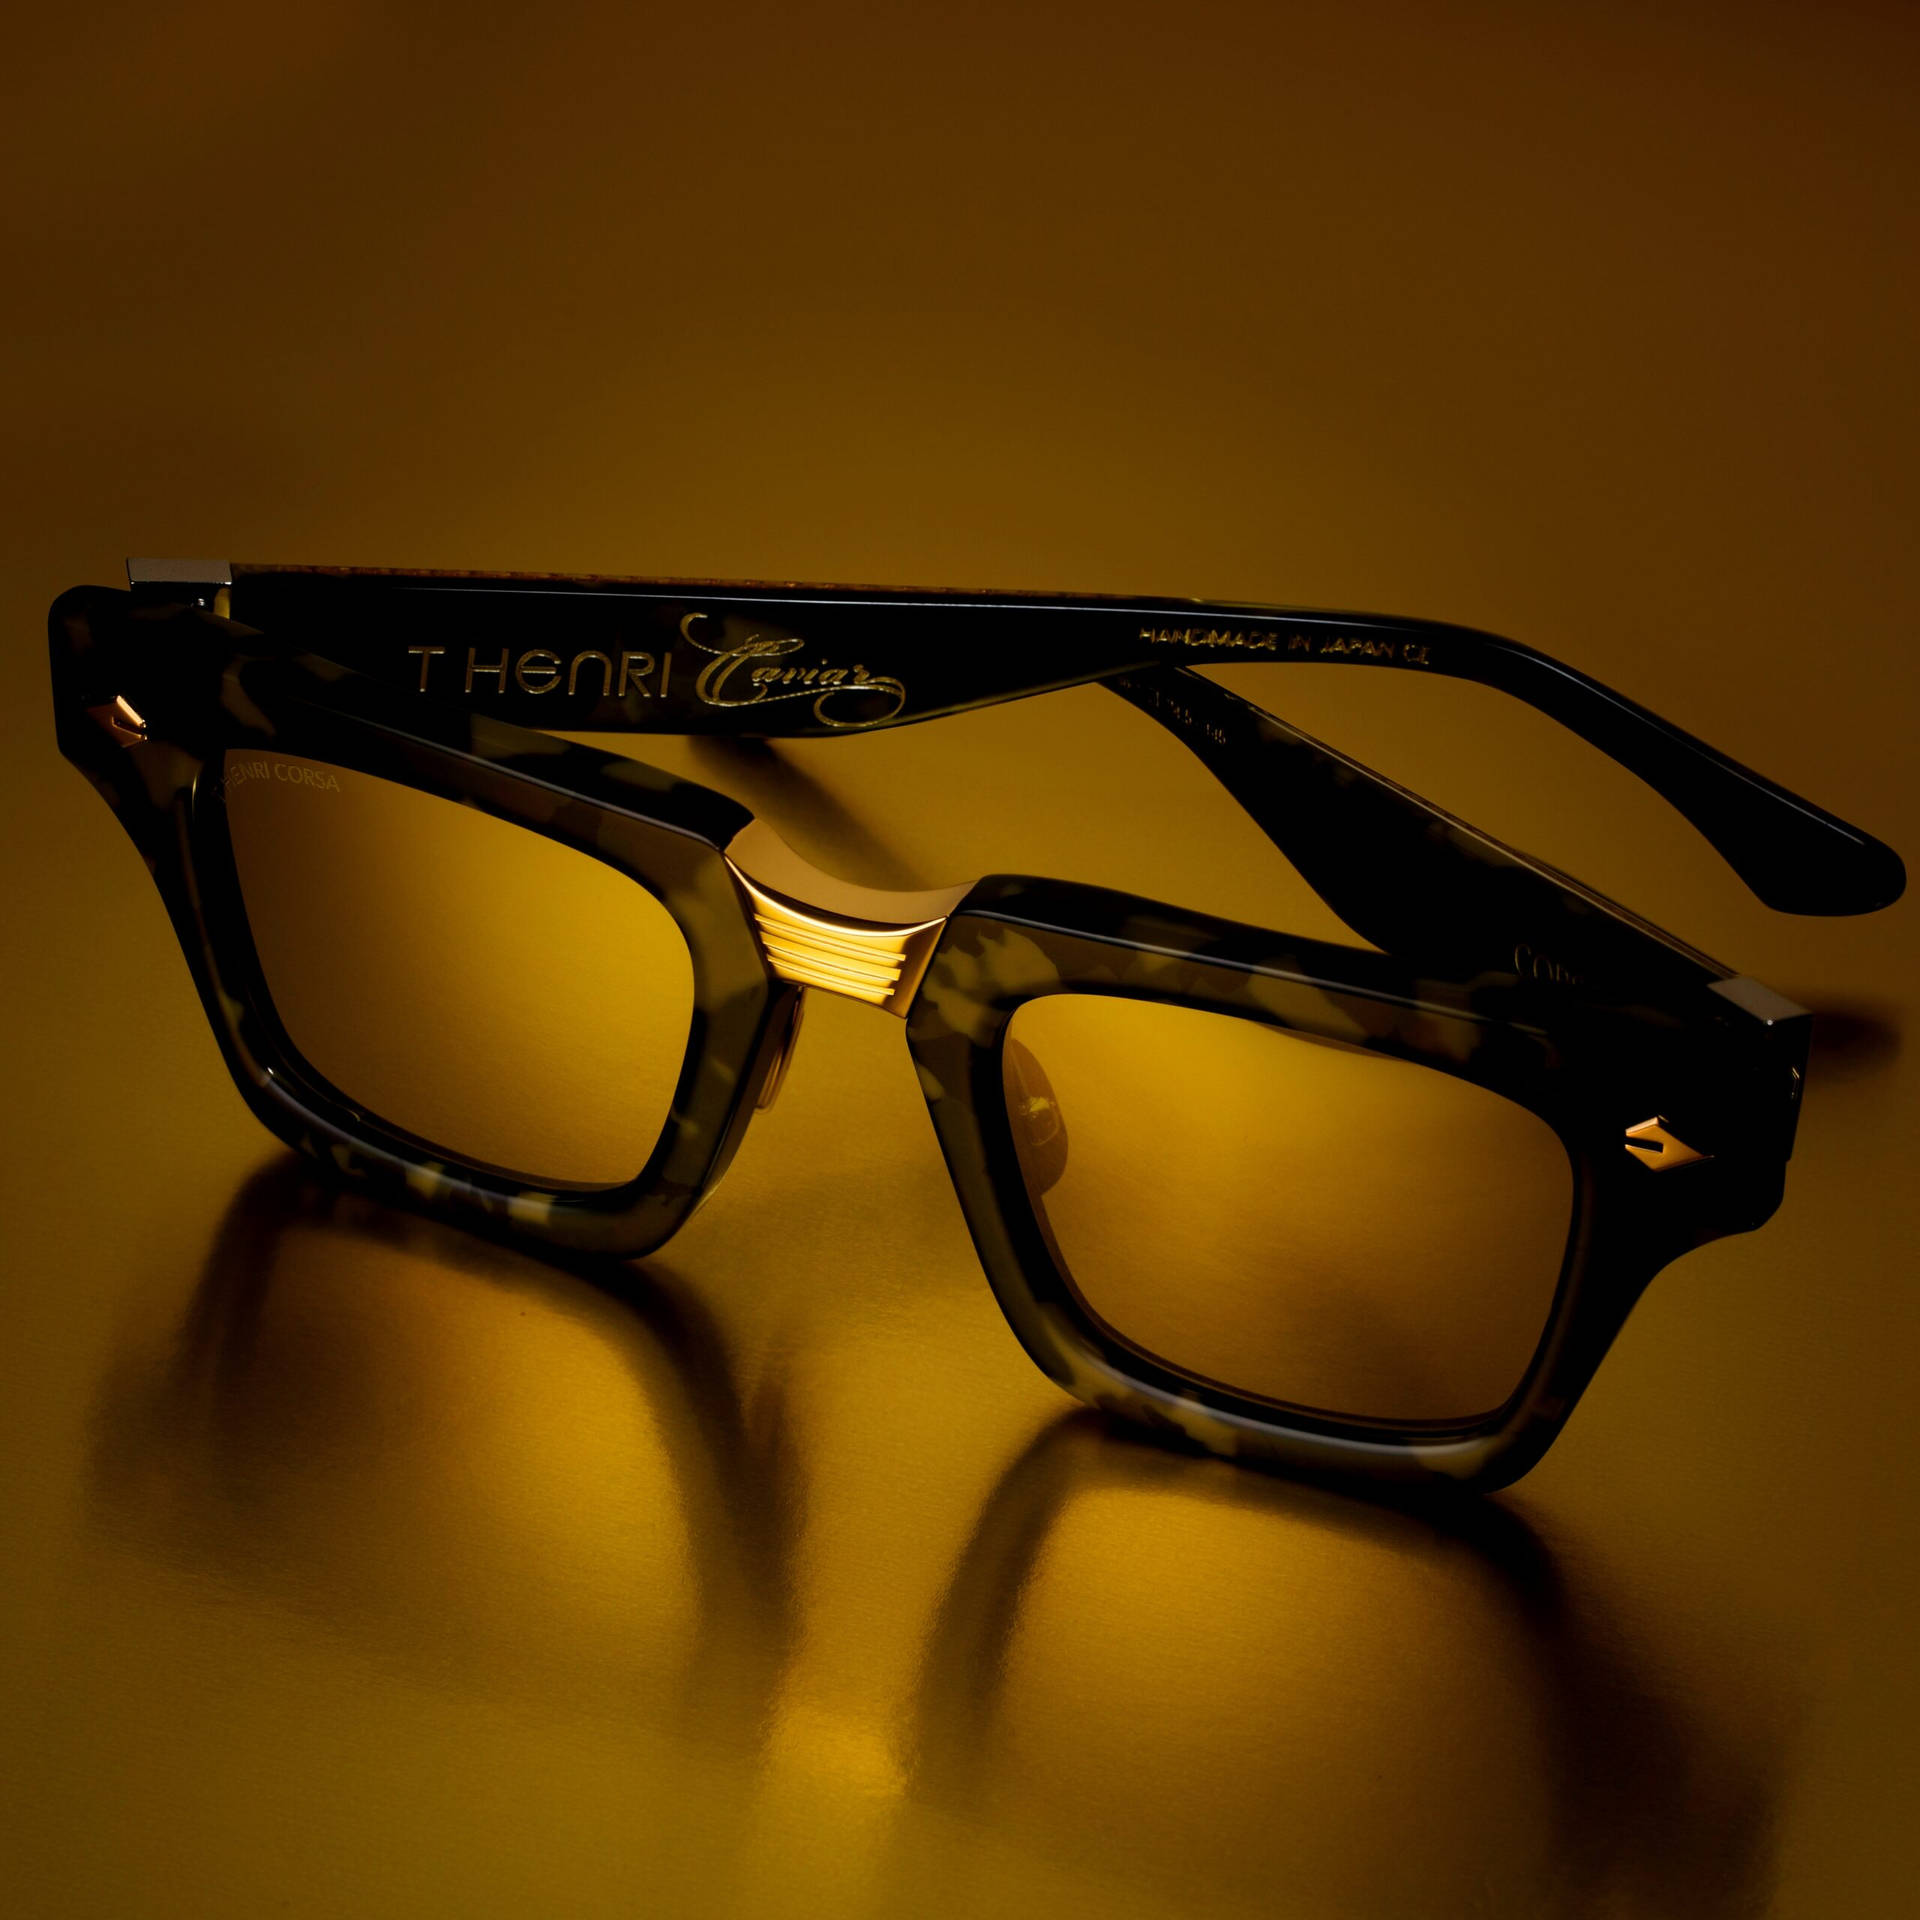 T Henri Caviar Glasses Background